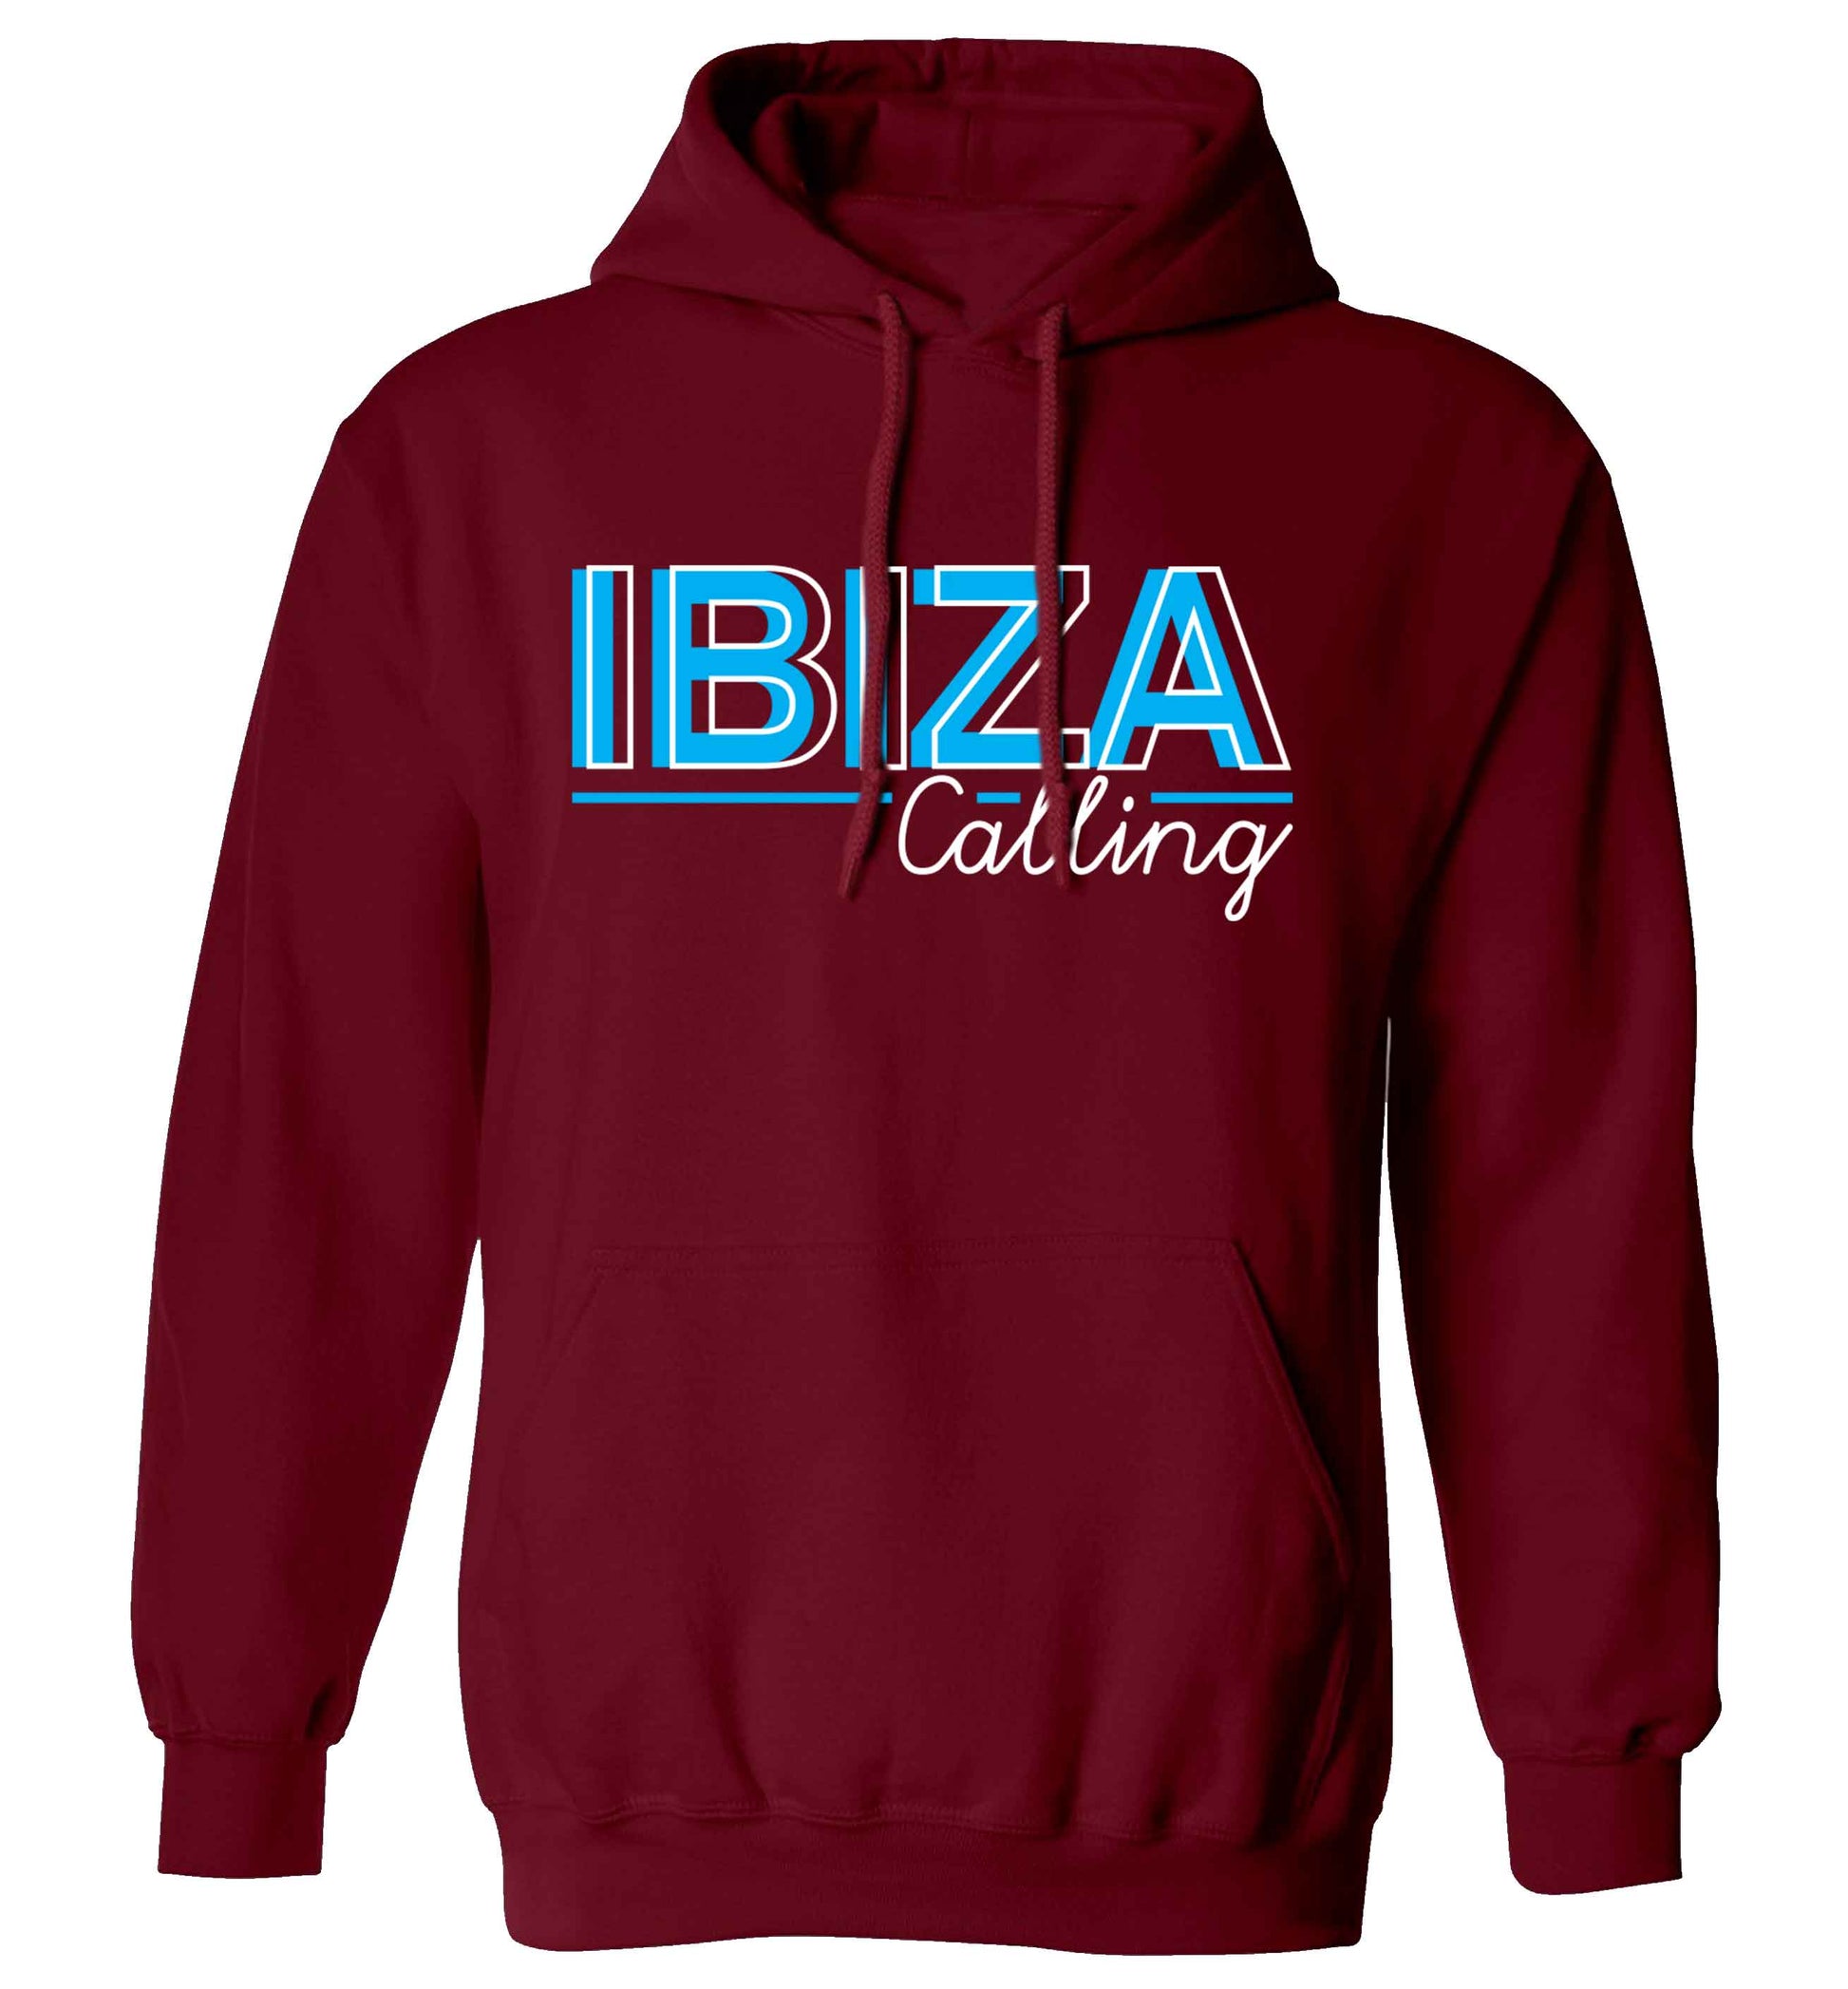 Ibiza calling adults unisex maroon hoodie 2XL